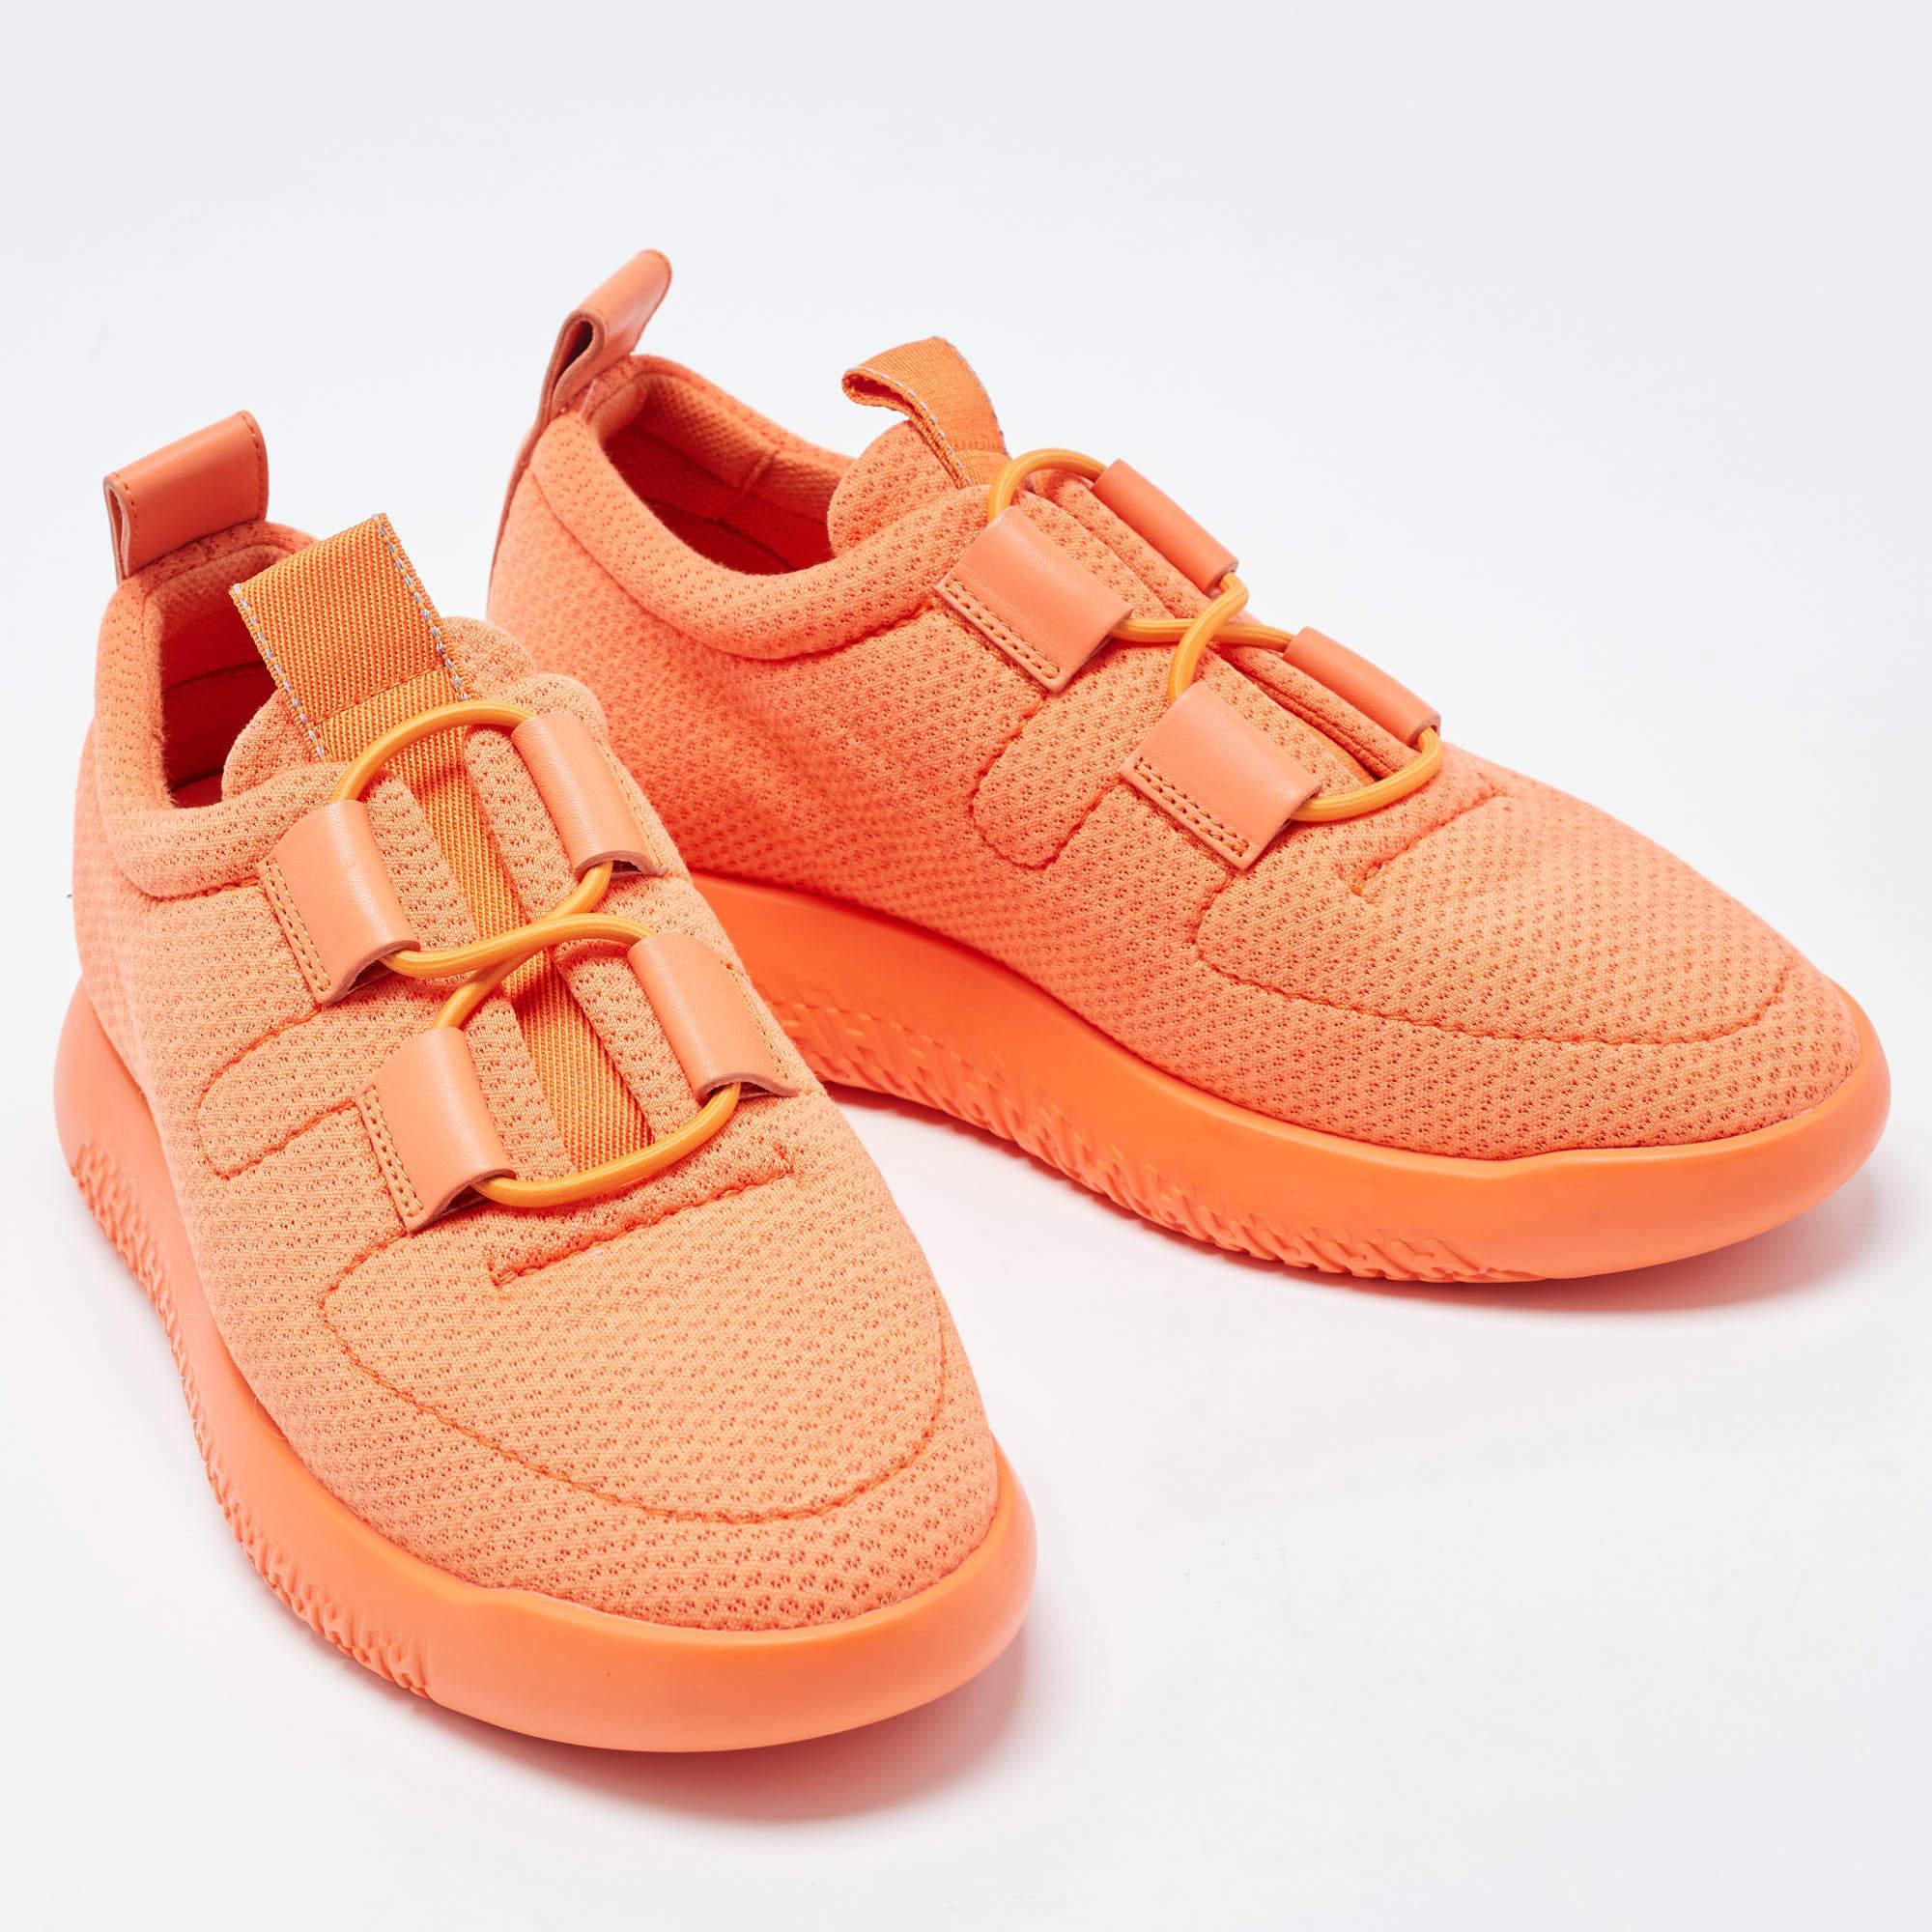 Women's Hermès Orange Leather and Neoprene Low Top Sneakers Size 36